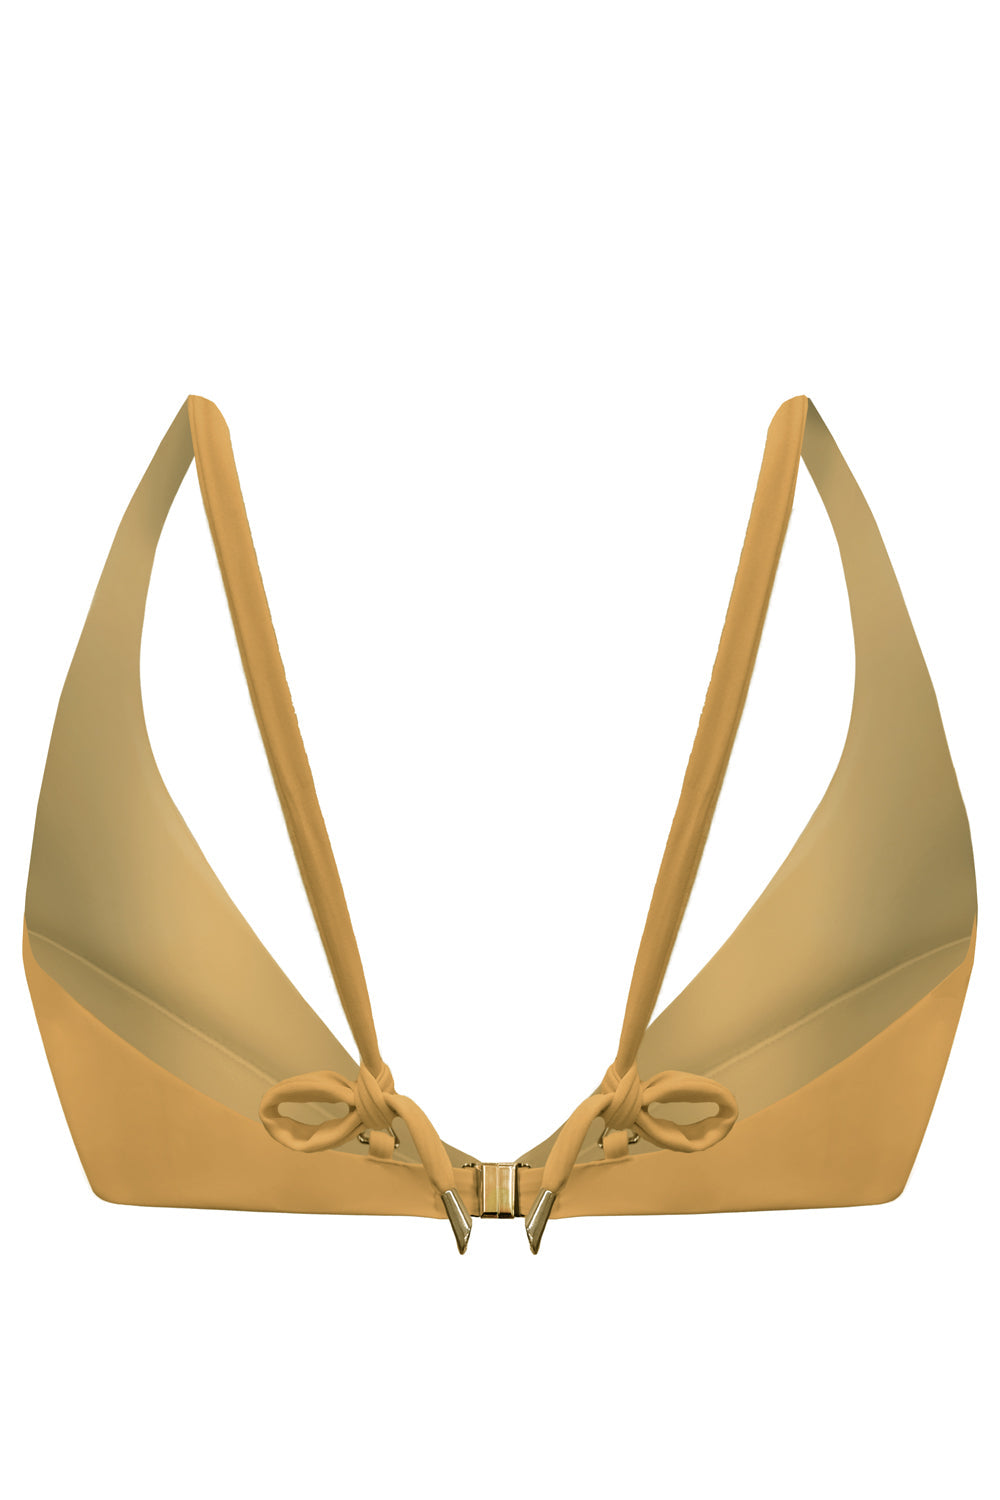 Radiya Golden Beige bikini top - Bikini top by yesUndress. Shop on yesUndress